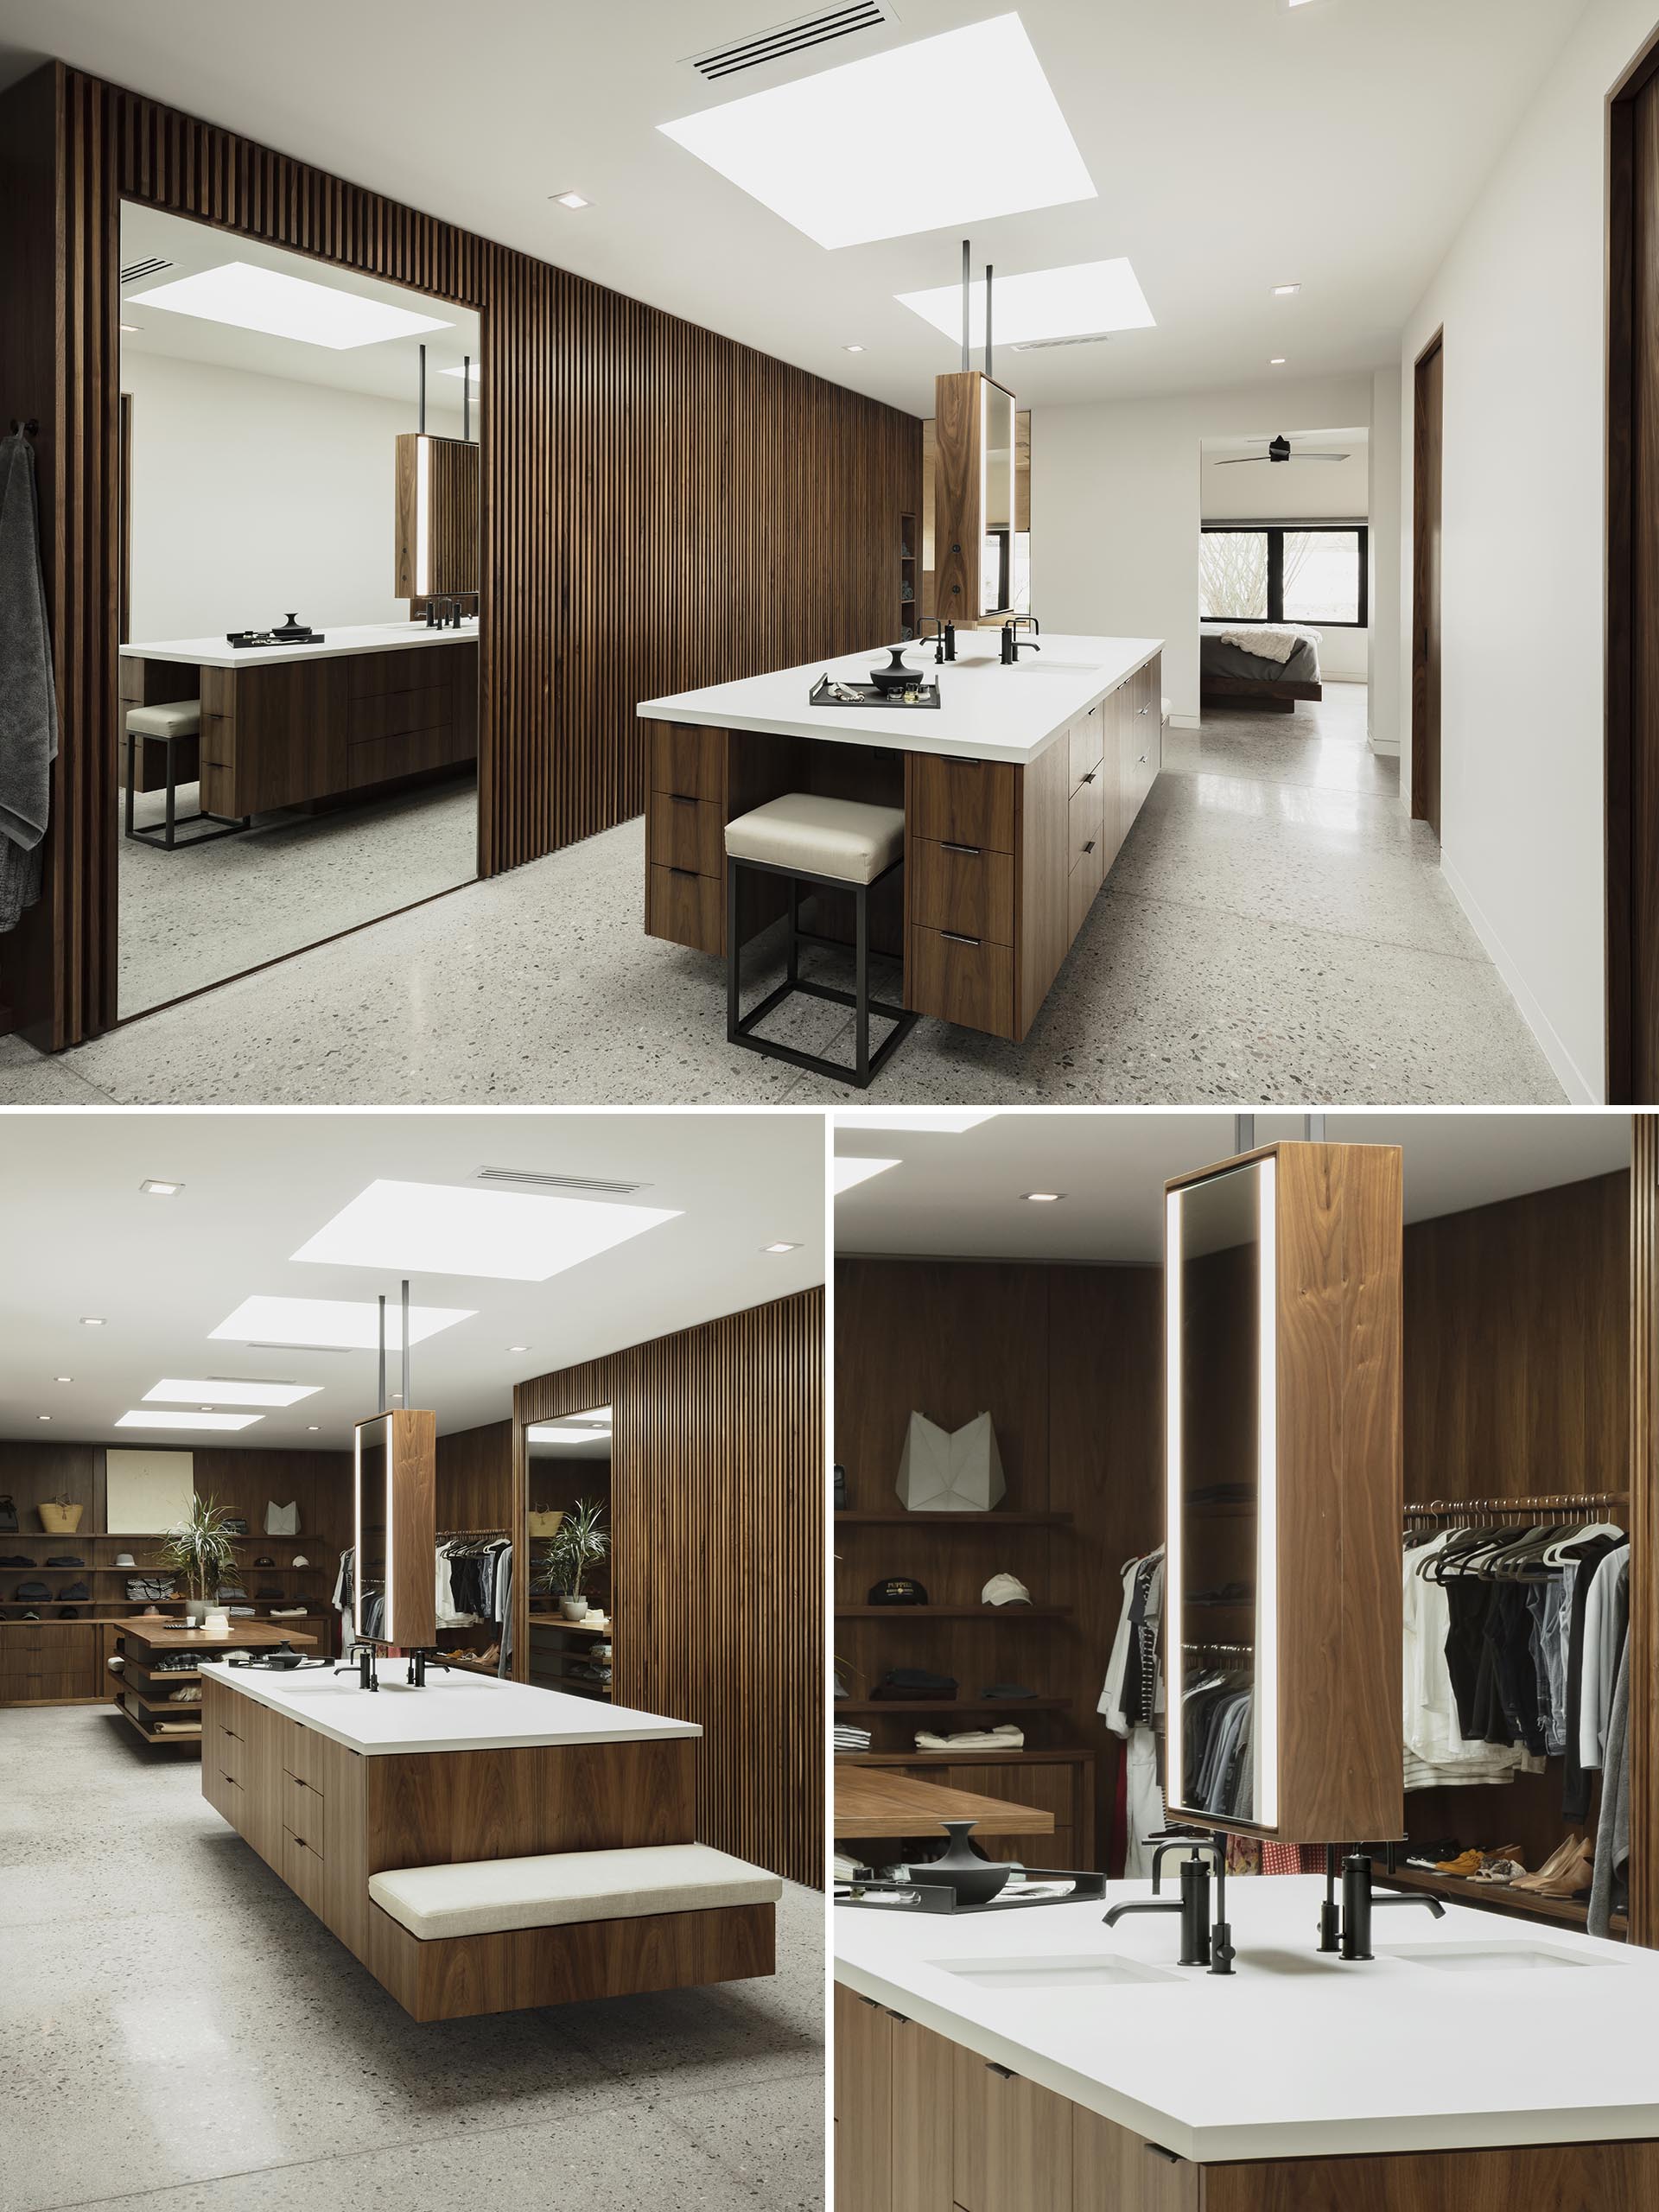 A modern spa-inspired bathroom with dual vanities.